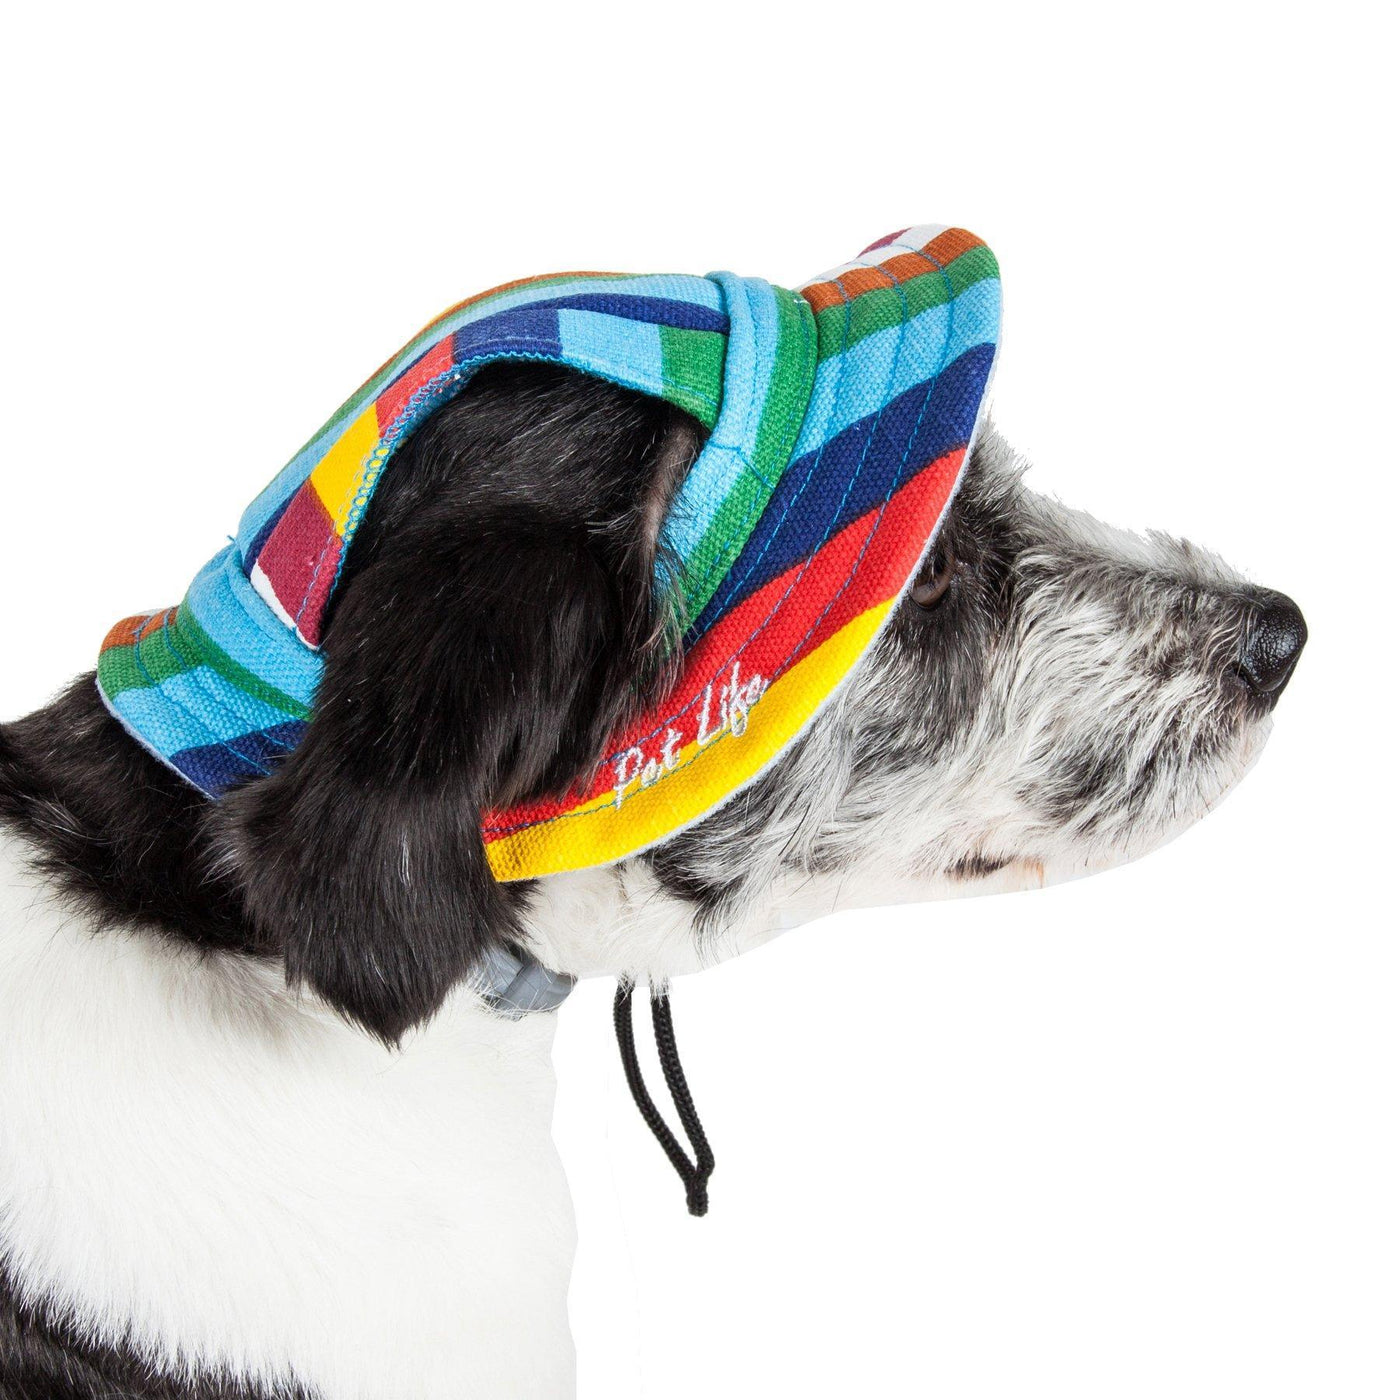 Pet Life Colorfur Adjustable Fashion Canopy Brimmed Pet Dog Hat Cap